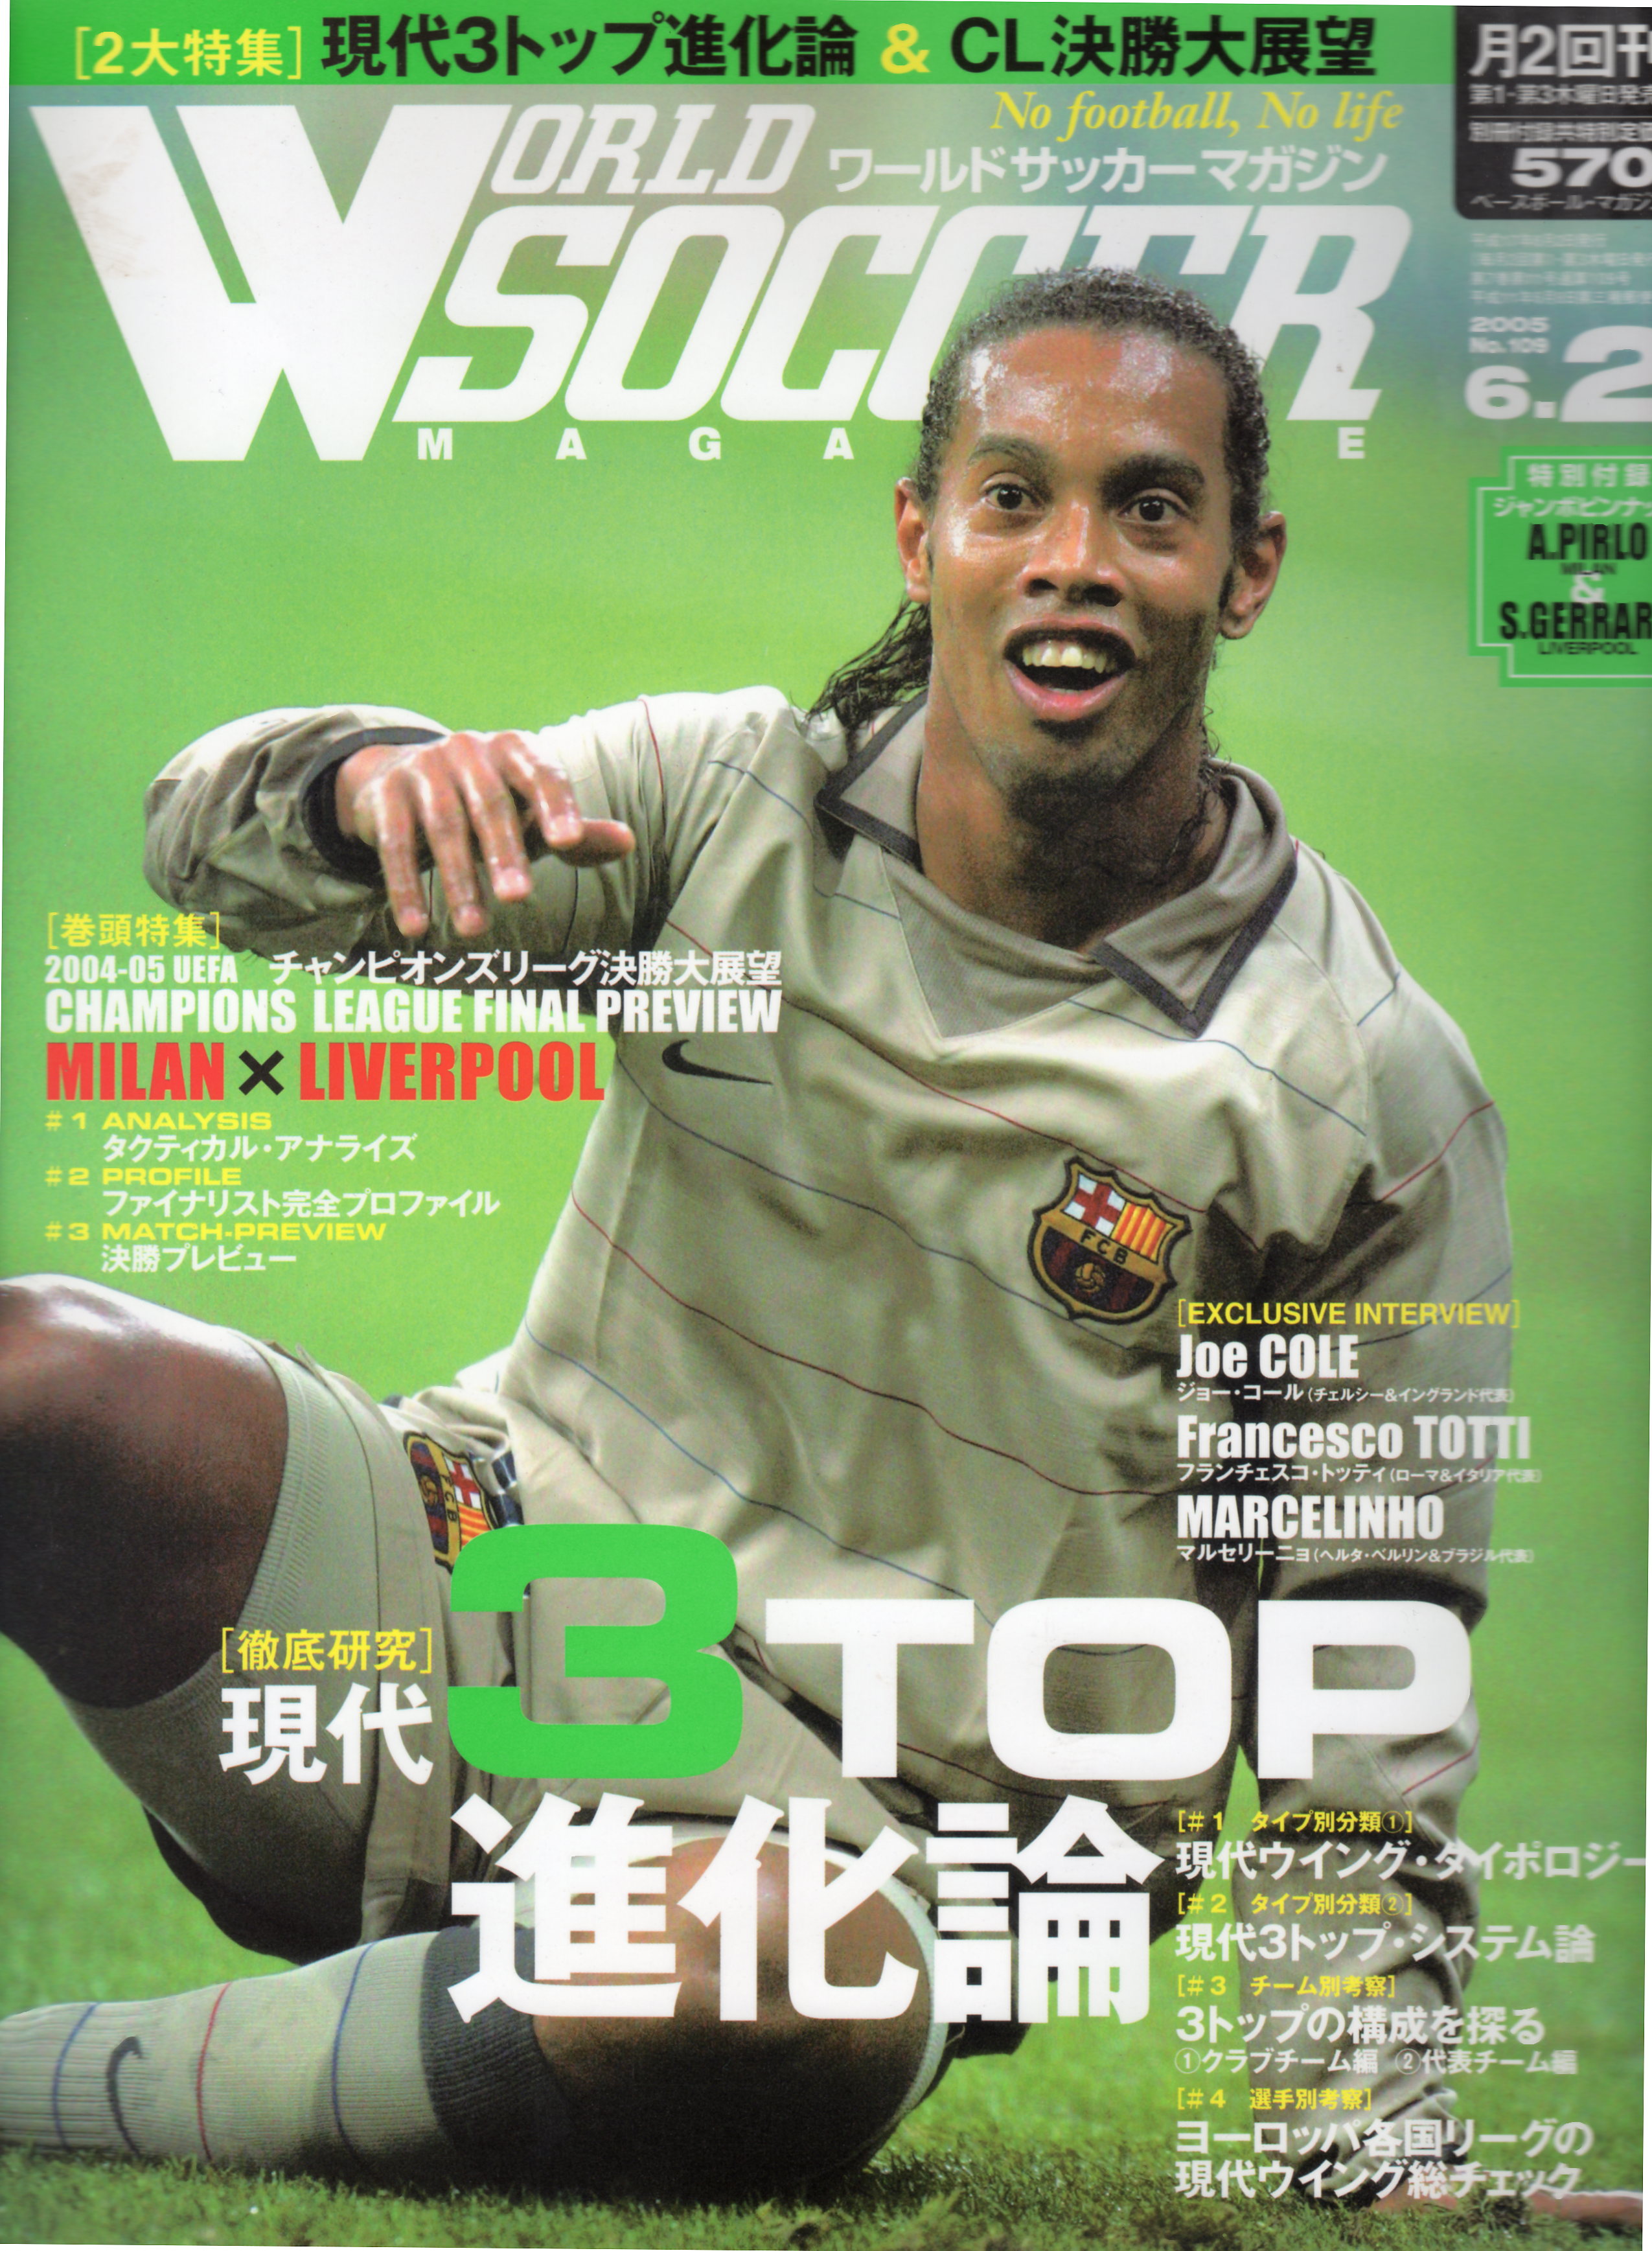 WORLD SOCCER MAGAZINE 2005.07.02